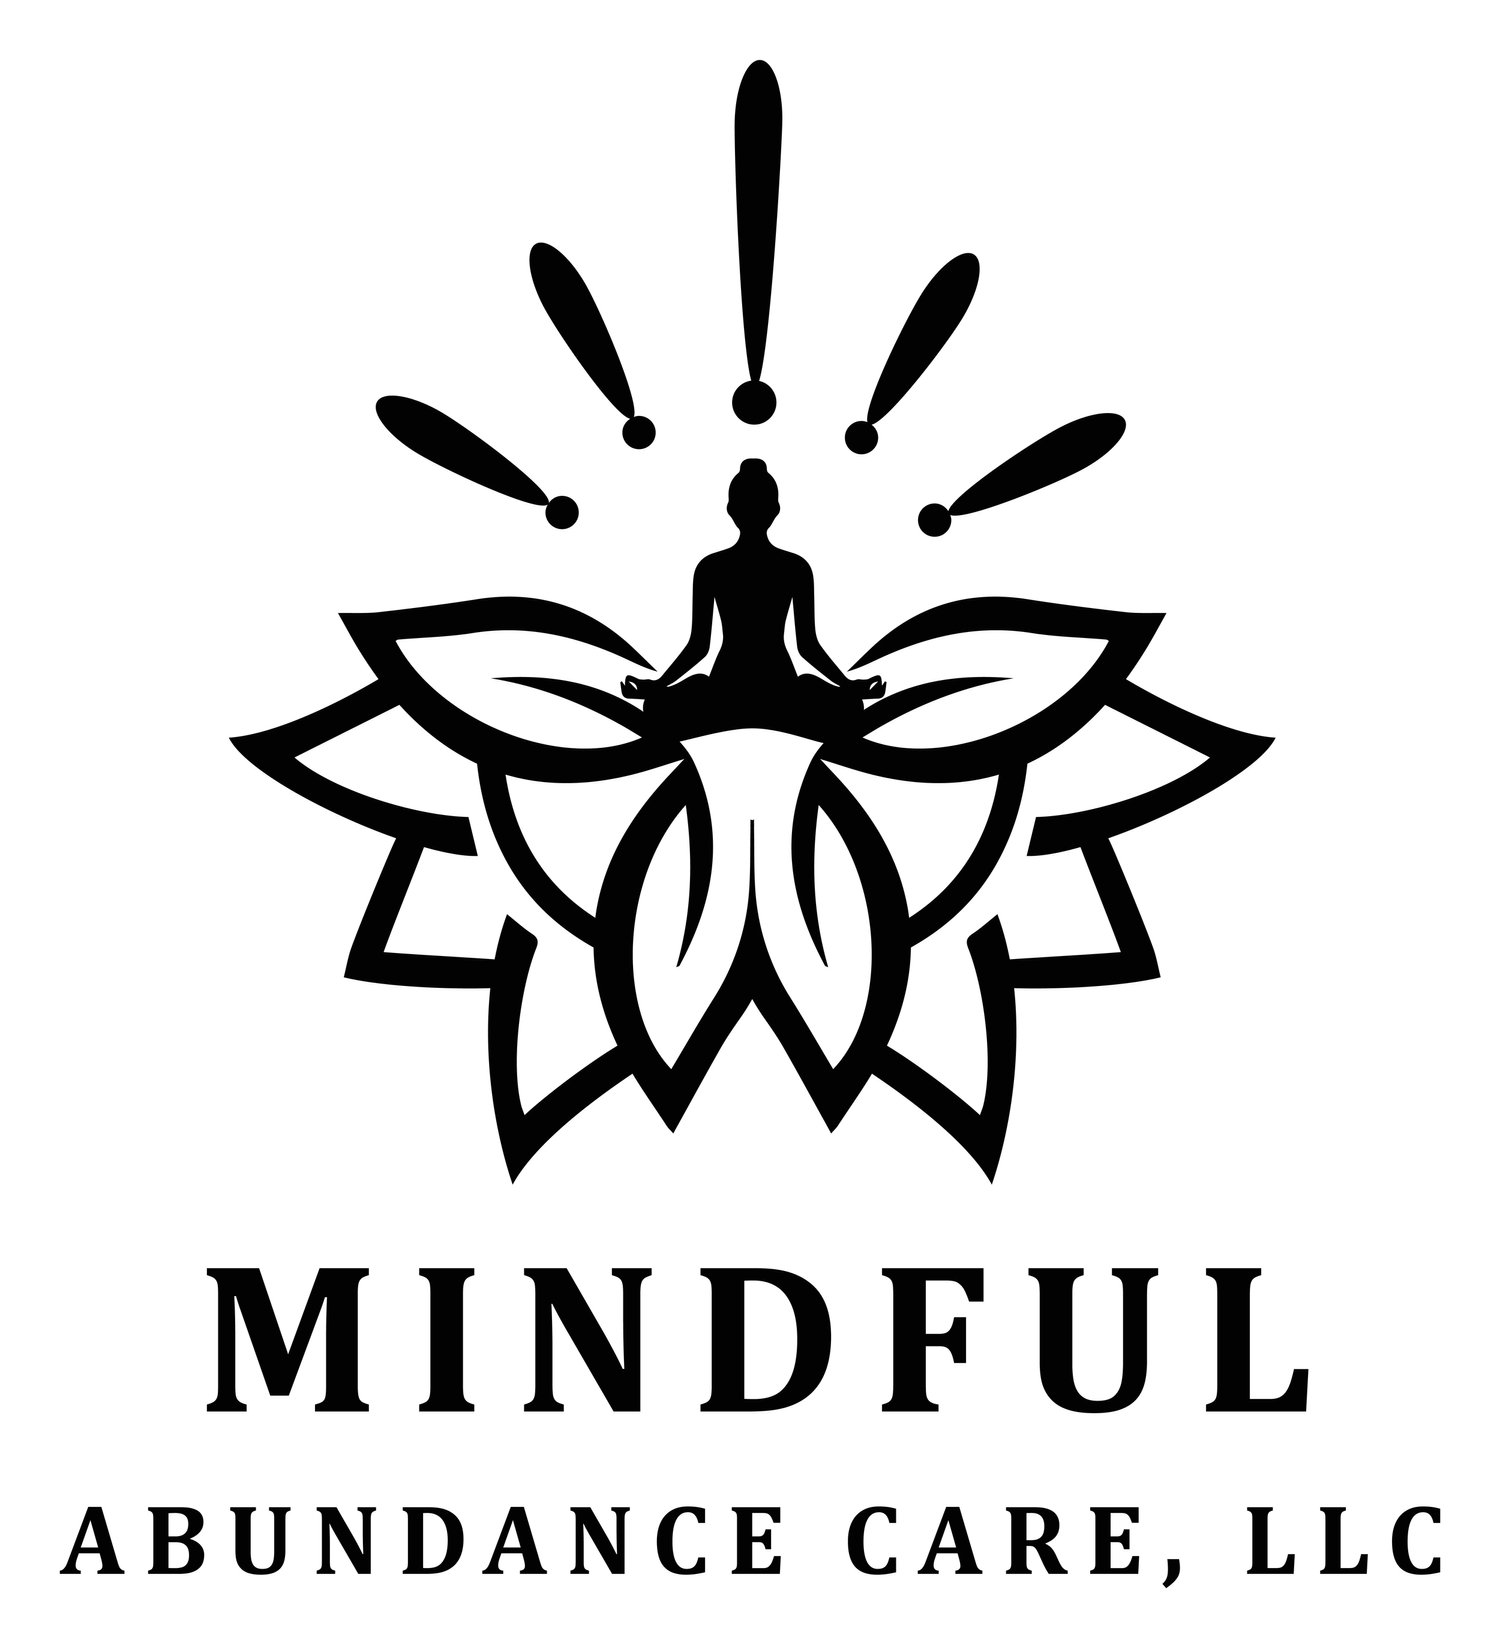 Mindful Abundance Care, LLC